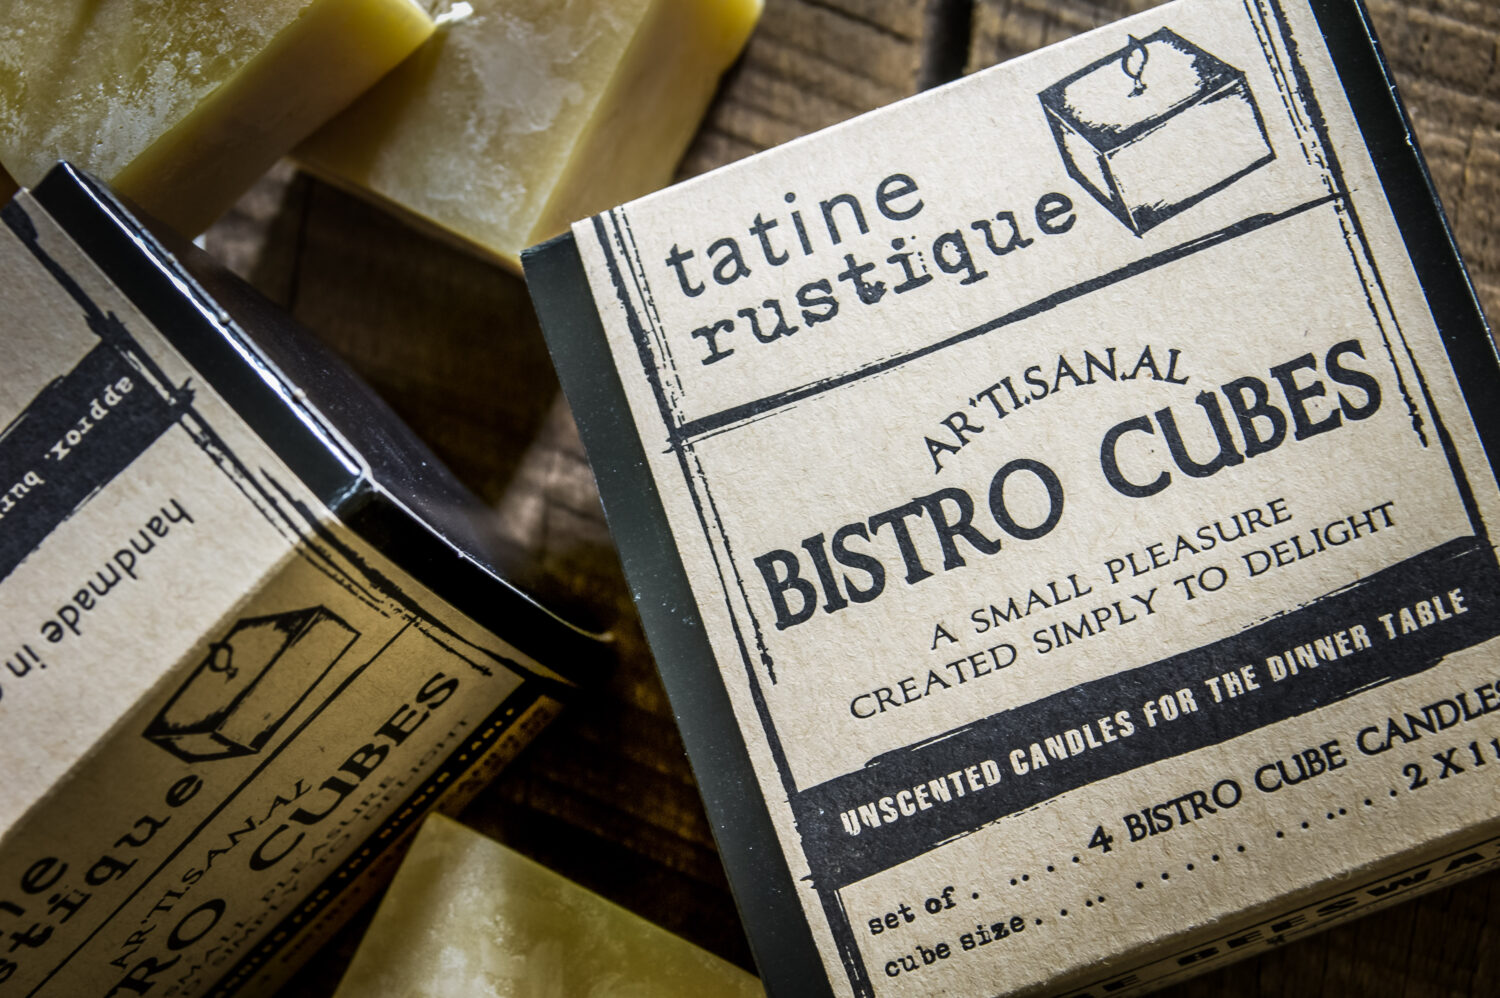 bistro cubes : packaging design for tatine